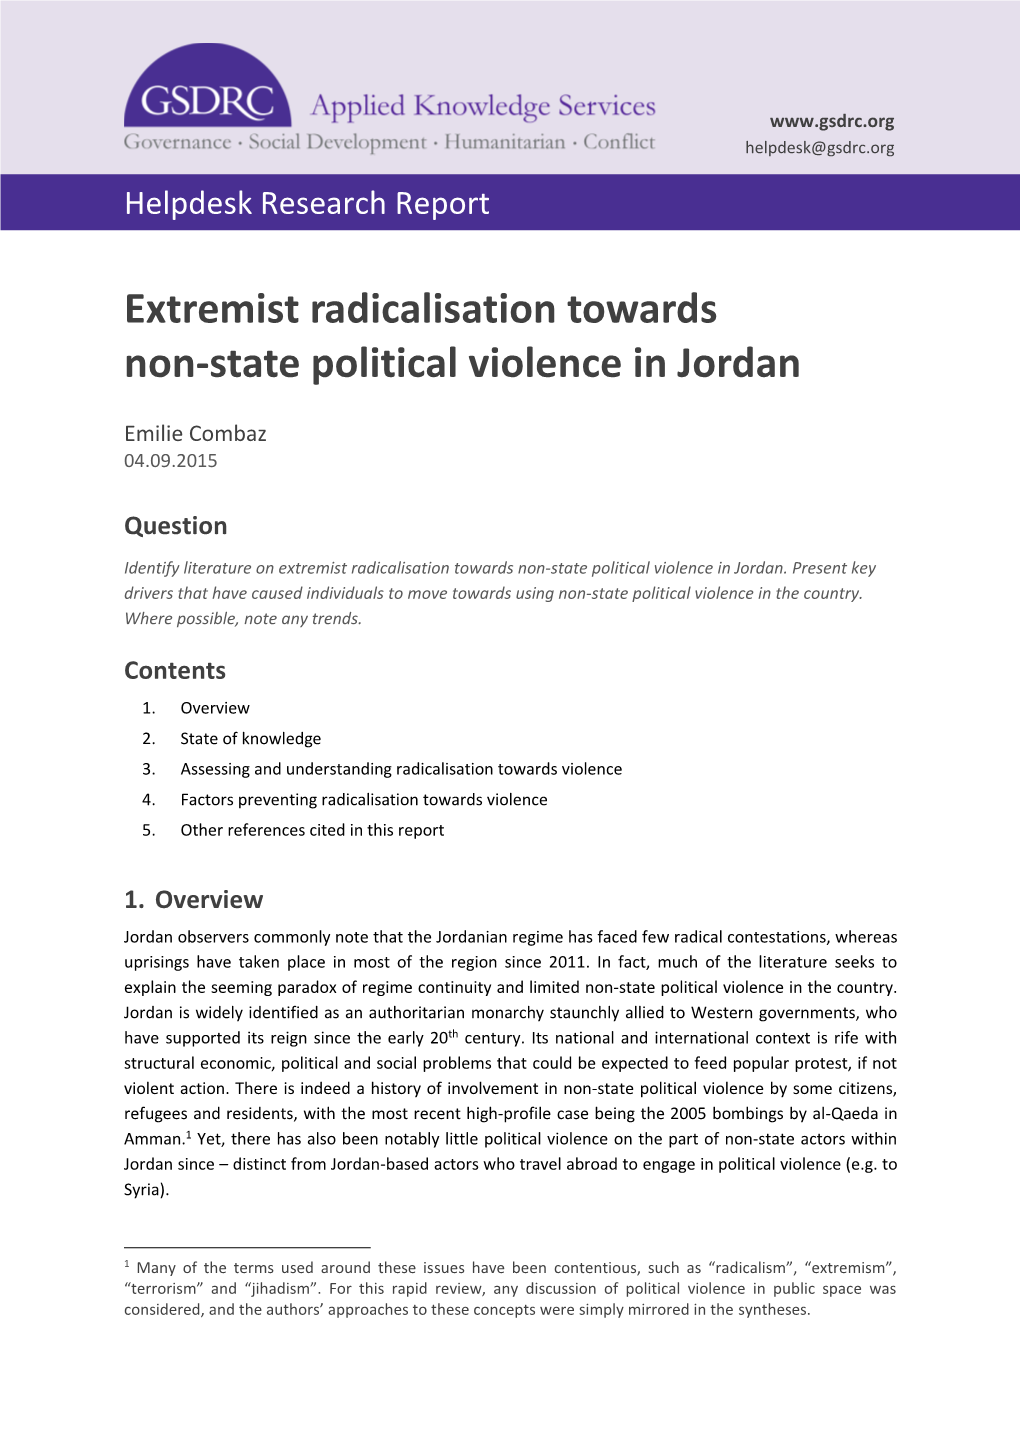 Extremist Radicalisation Towards Non-State Violence in Jordan